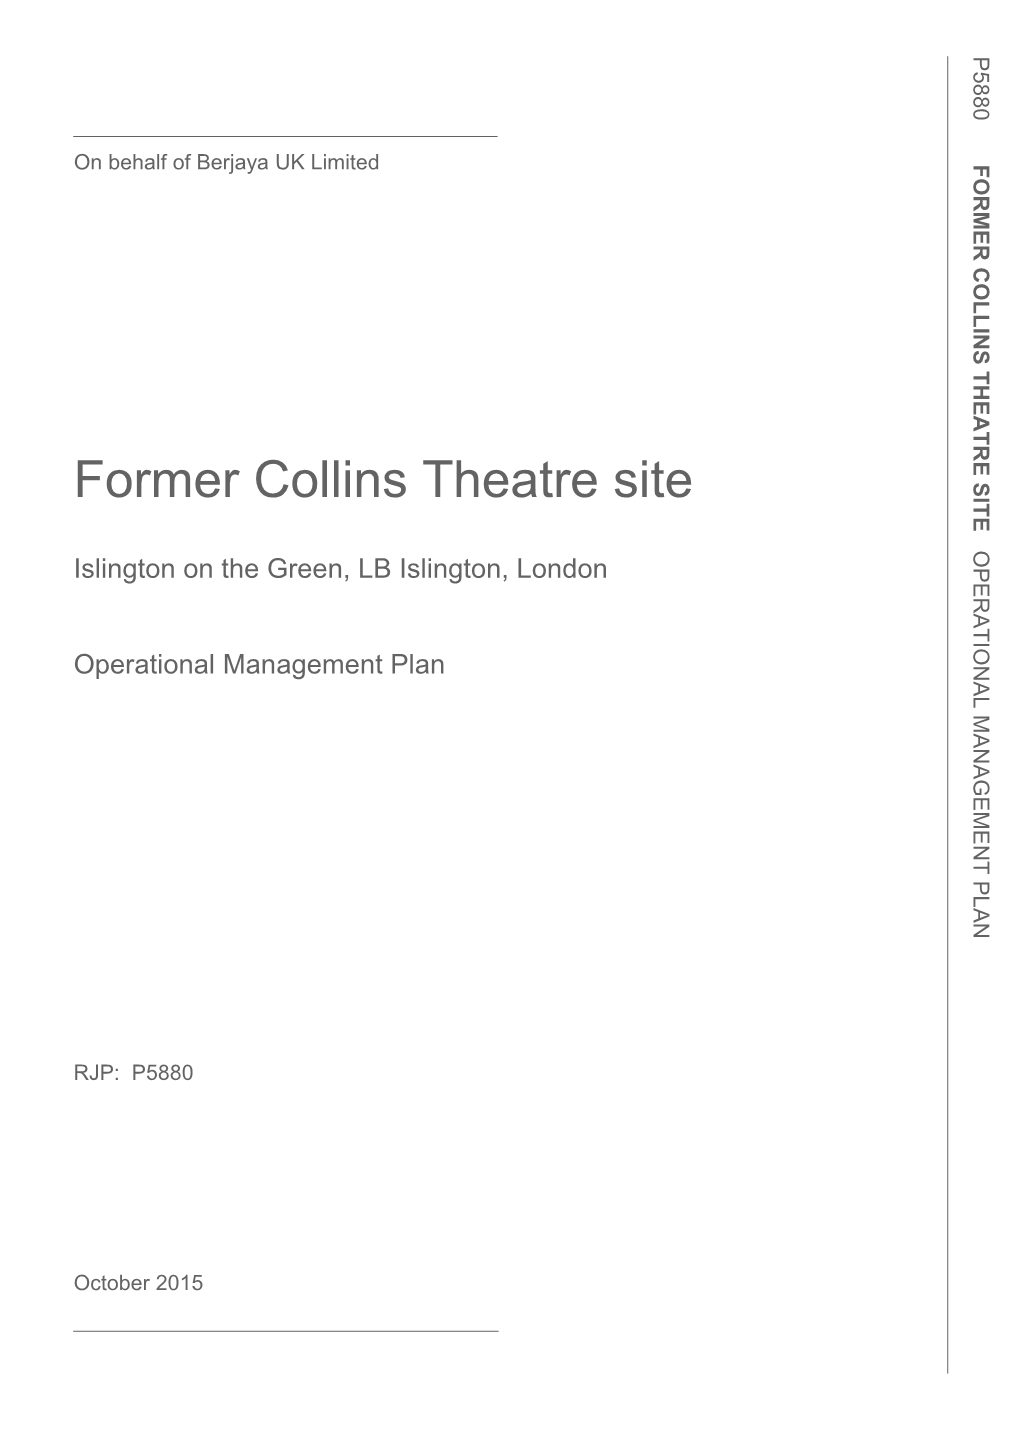 Former Collins Theatre Site